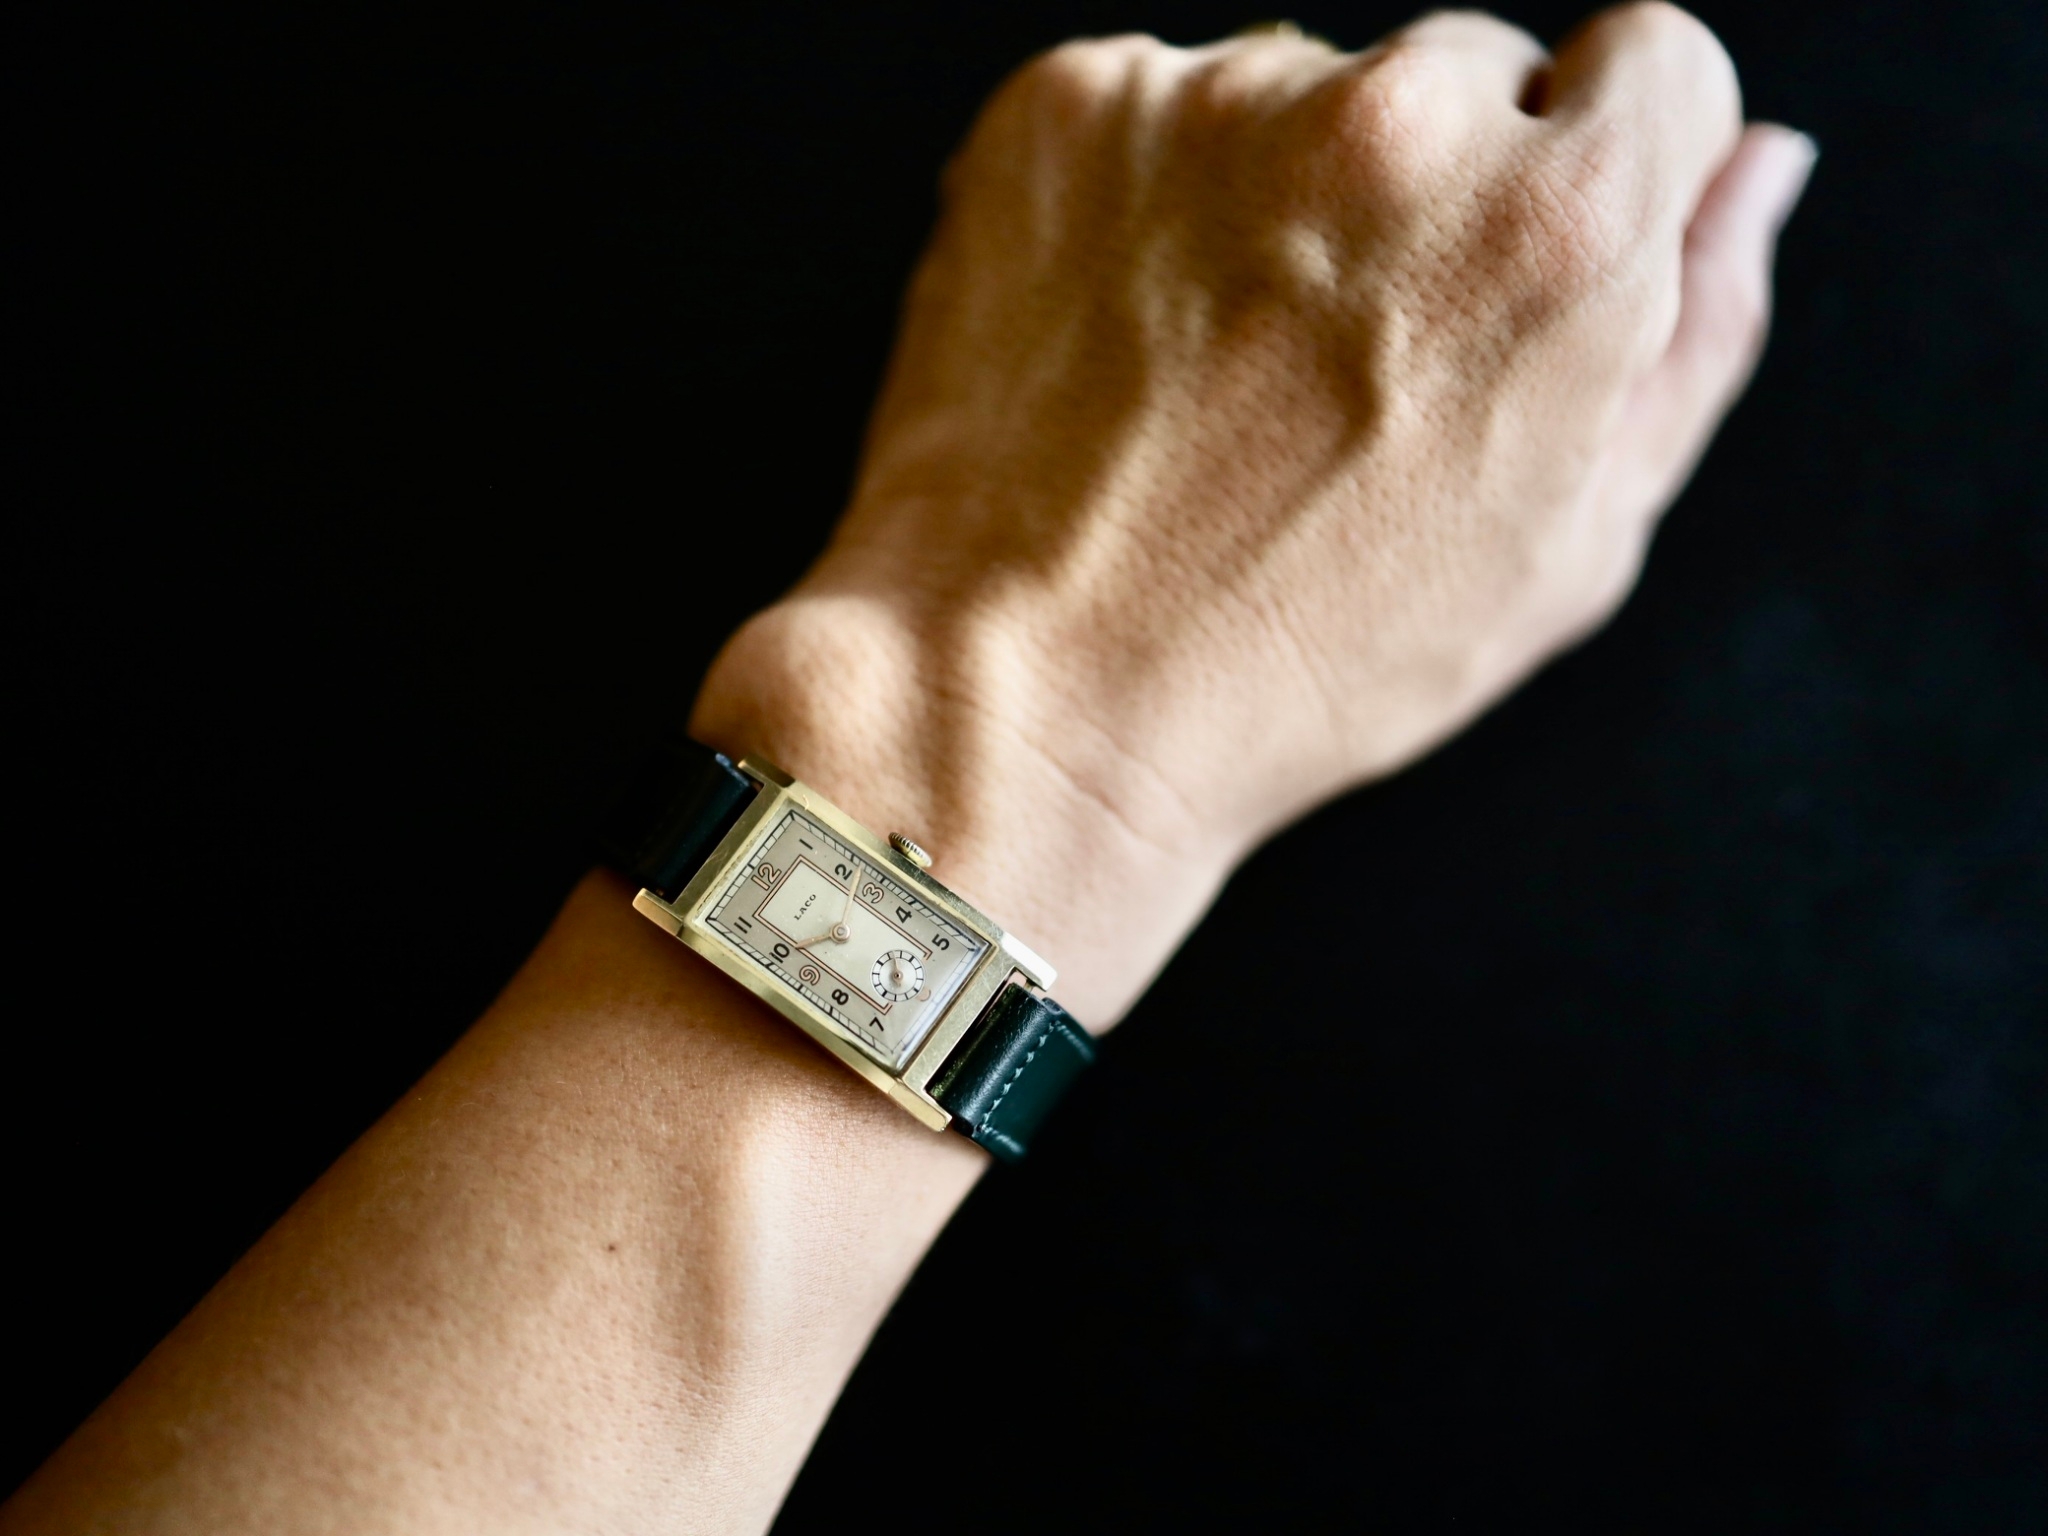 LACO / 14KYG RECTANGULAR CASE 1930'S - アンティーク腕時計専門店 